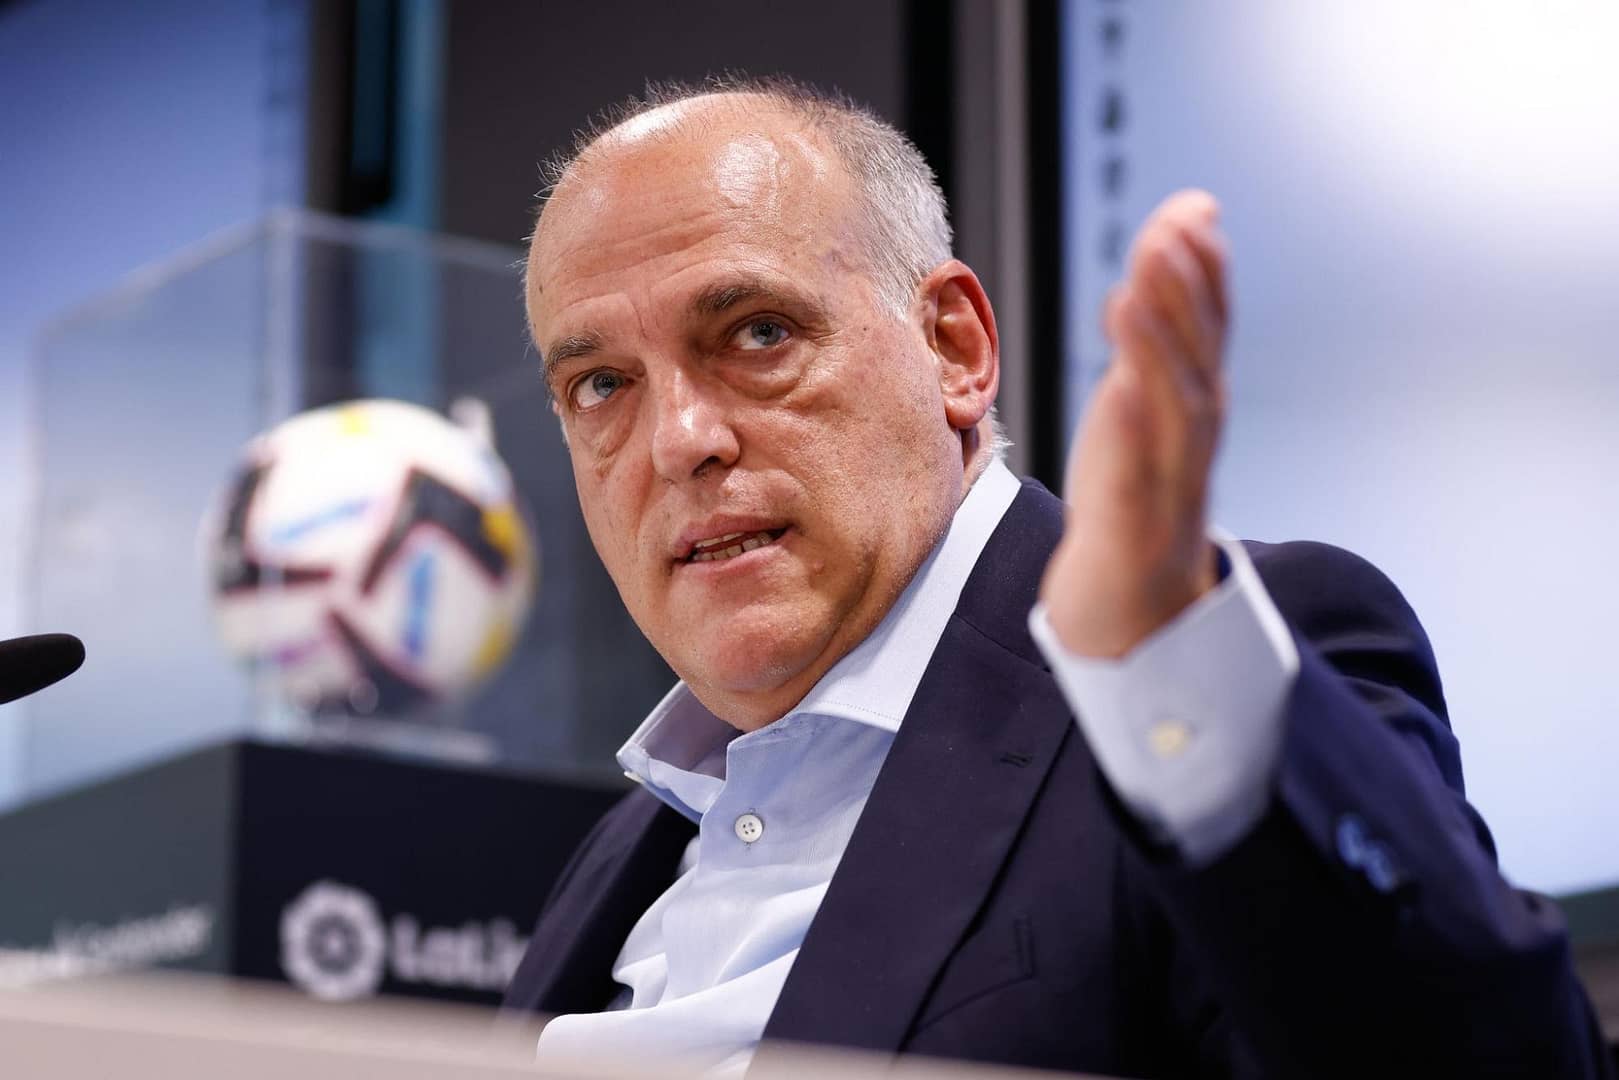 Tebas re-elected president of La Liga